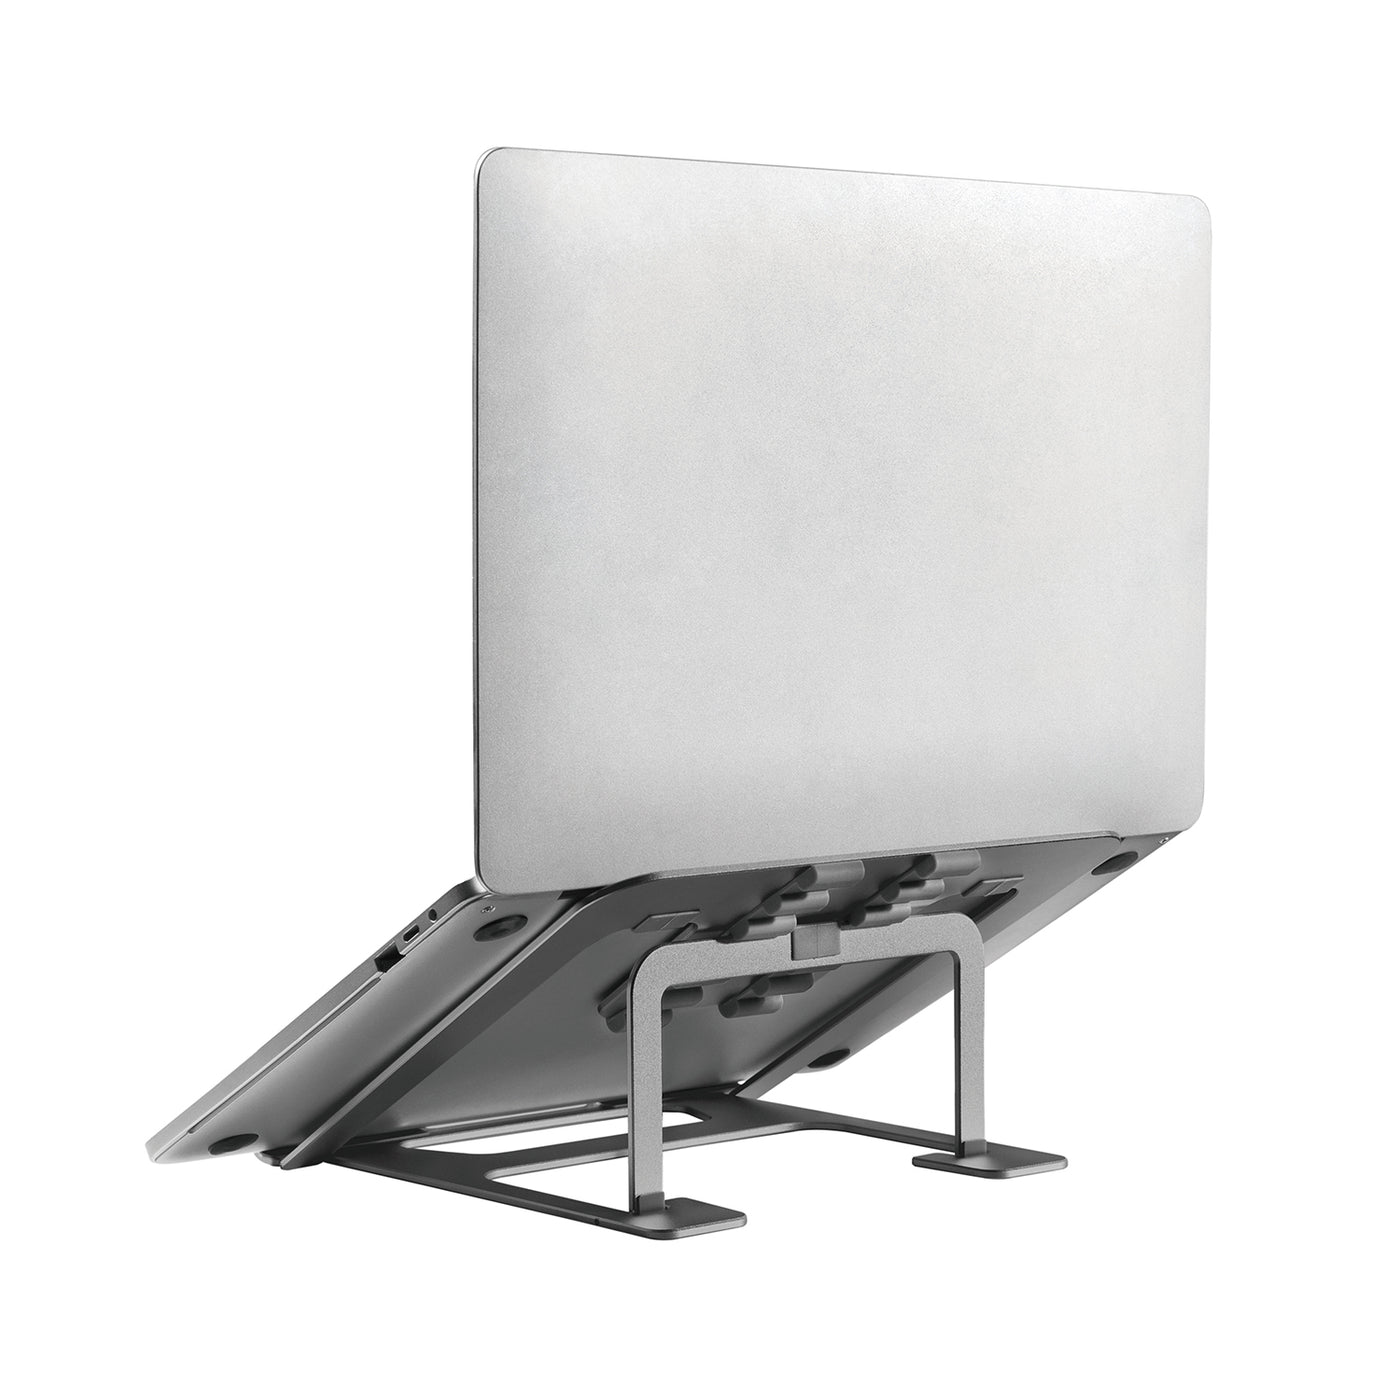 Ergo Office ER-416 G Soporte para portátil plegable ultrafino de aluminio ERGOOFFICE.EU , gris, se adapta a portátiles de 11-15'', ER-416 G